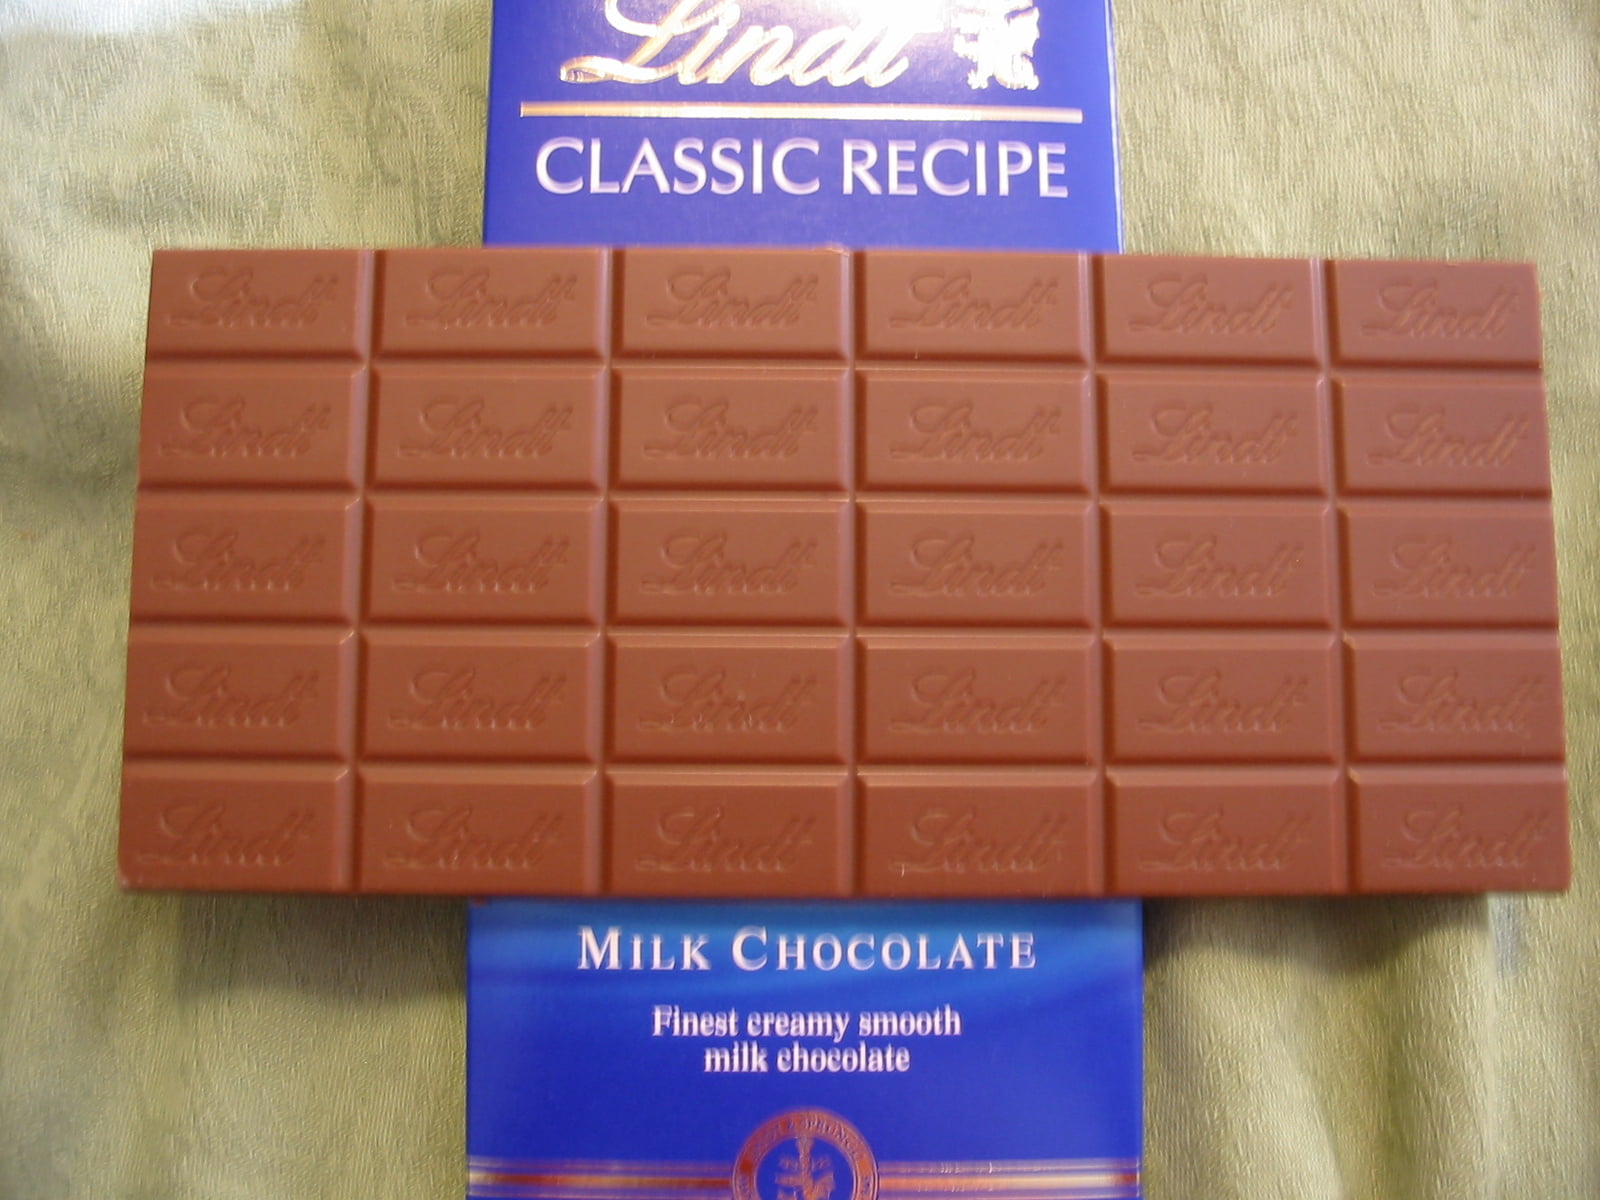 Lindt CLASSIC RECIPE Milk Chocolate Candy Bar, 1 bar / 4.4 oz - Ralphs